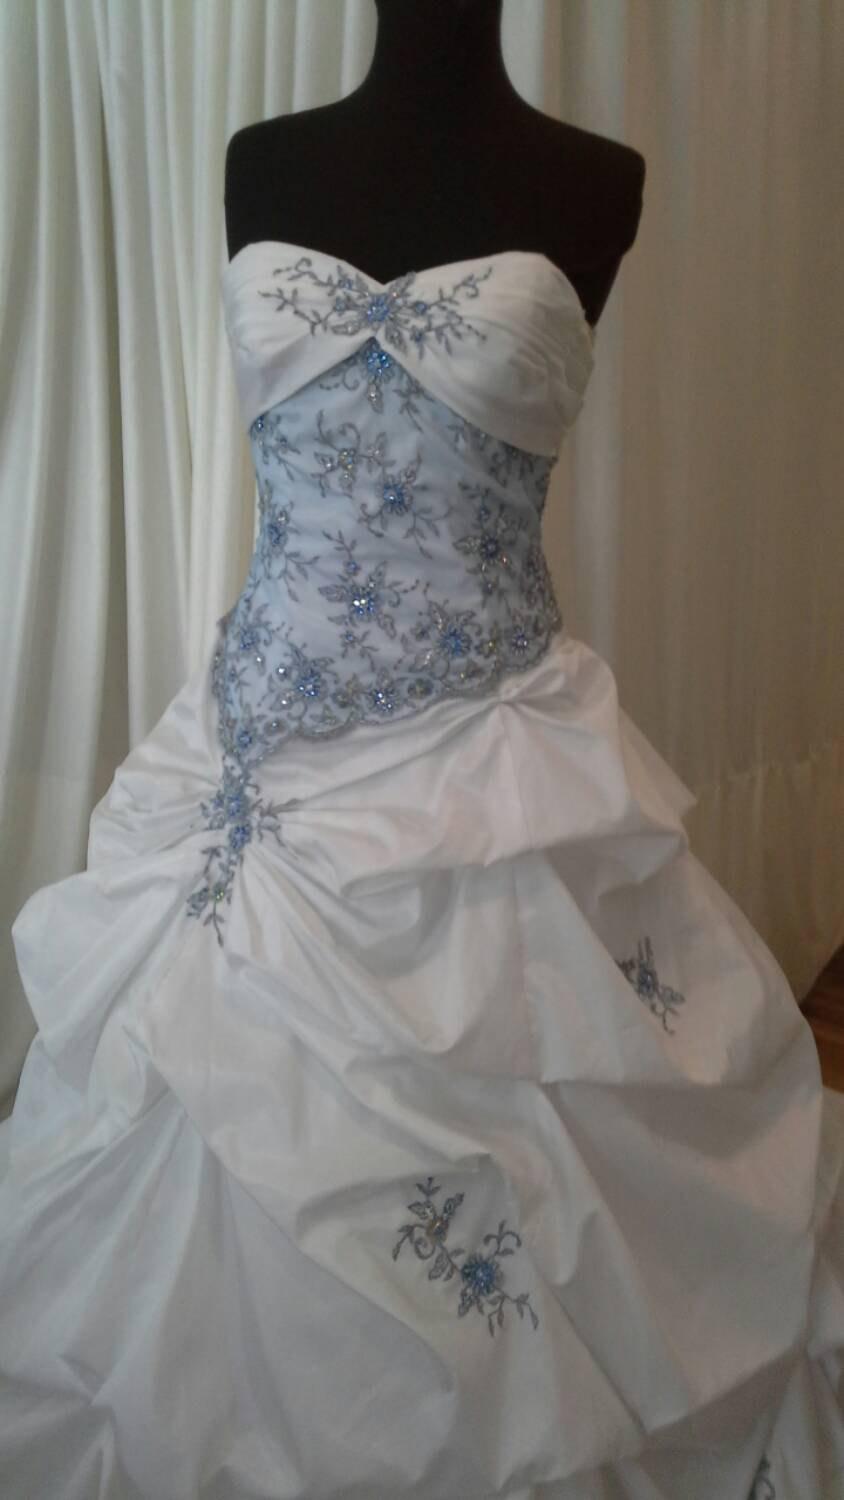 زفاف - White and blue "fairytale" ballgown/wedding dress